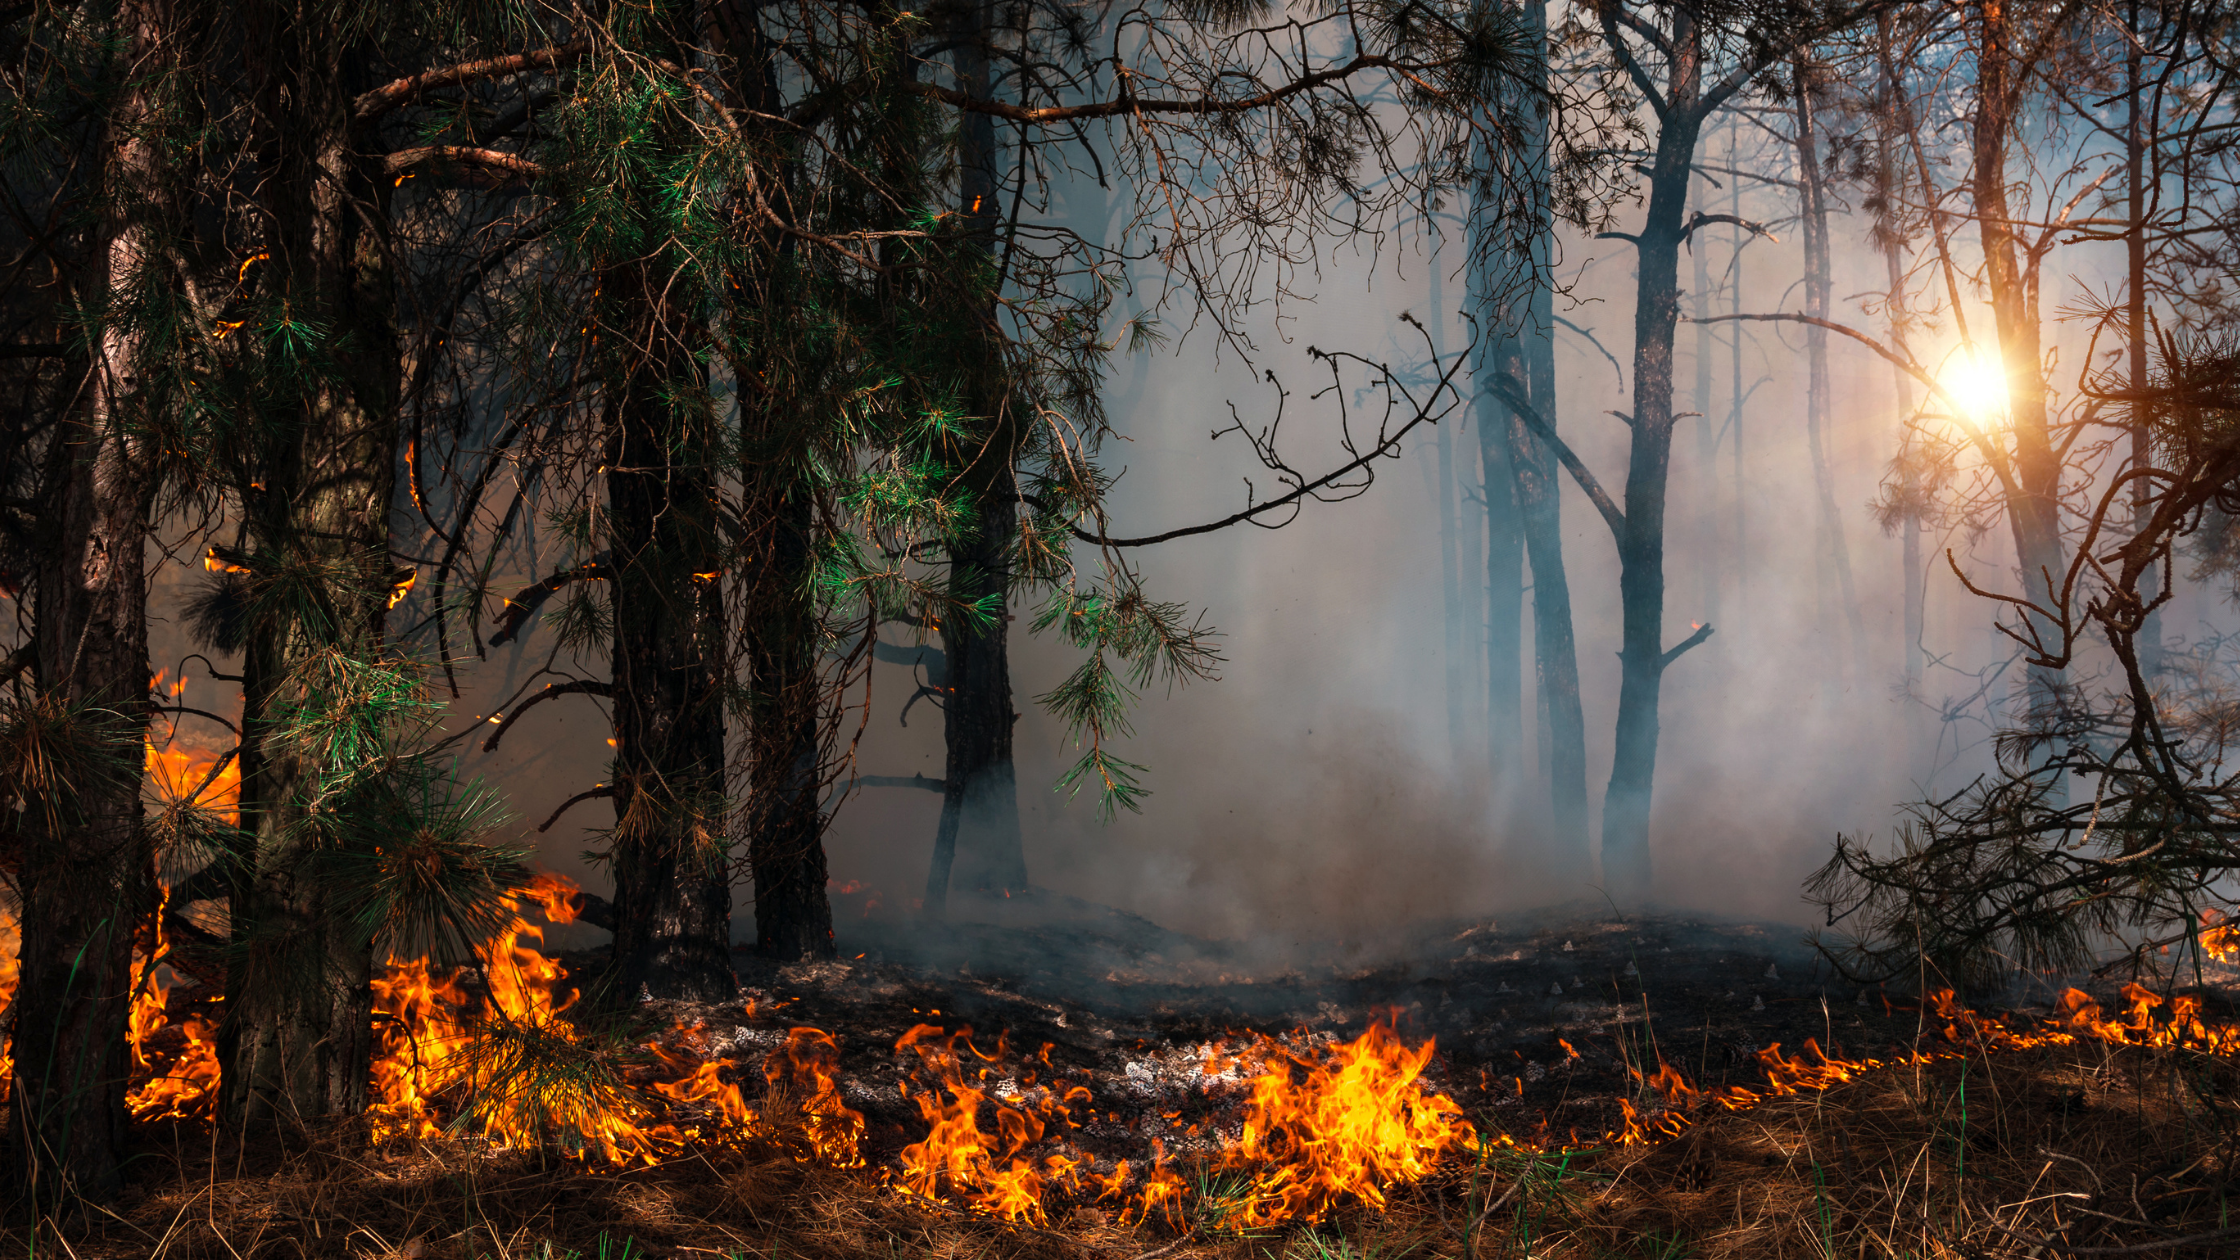 The Deep Devastation of Wildfires